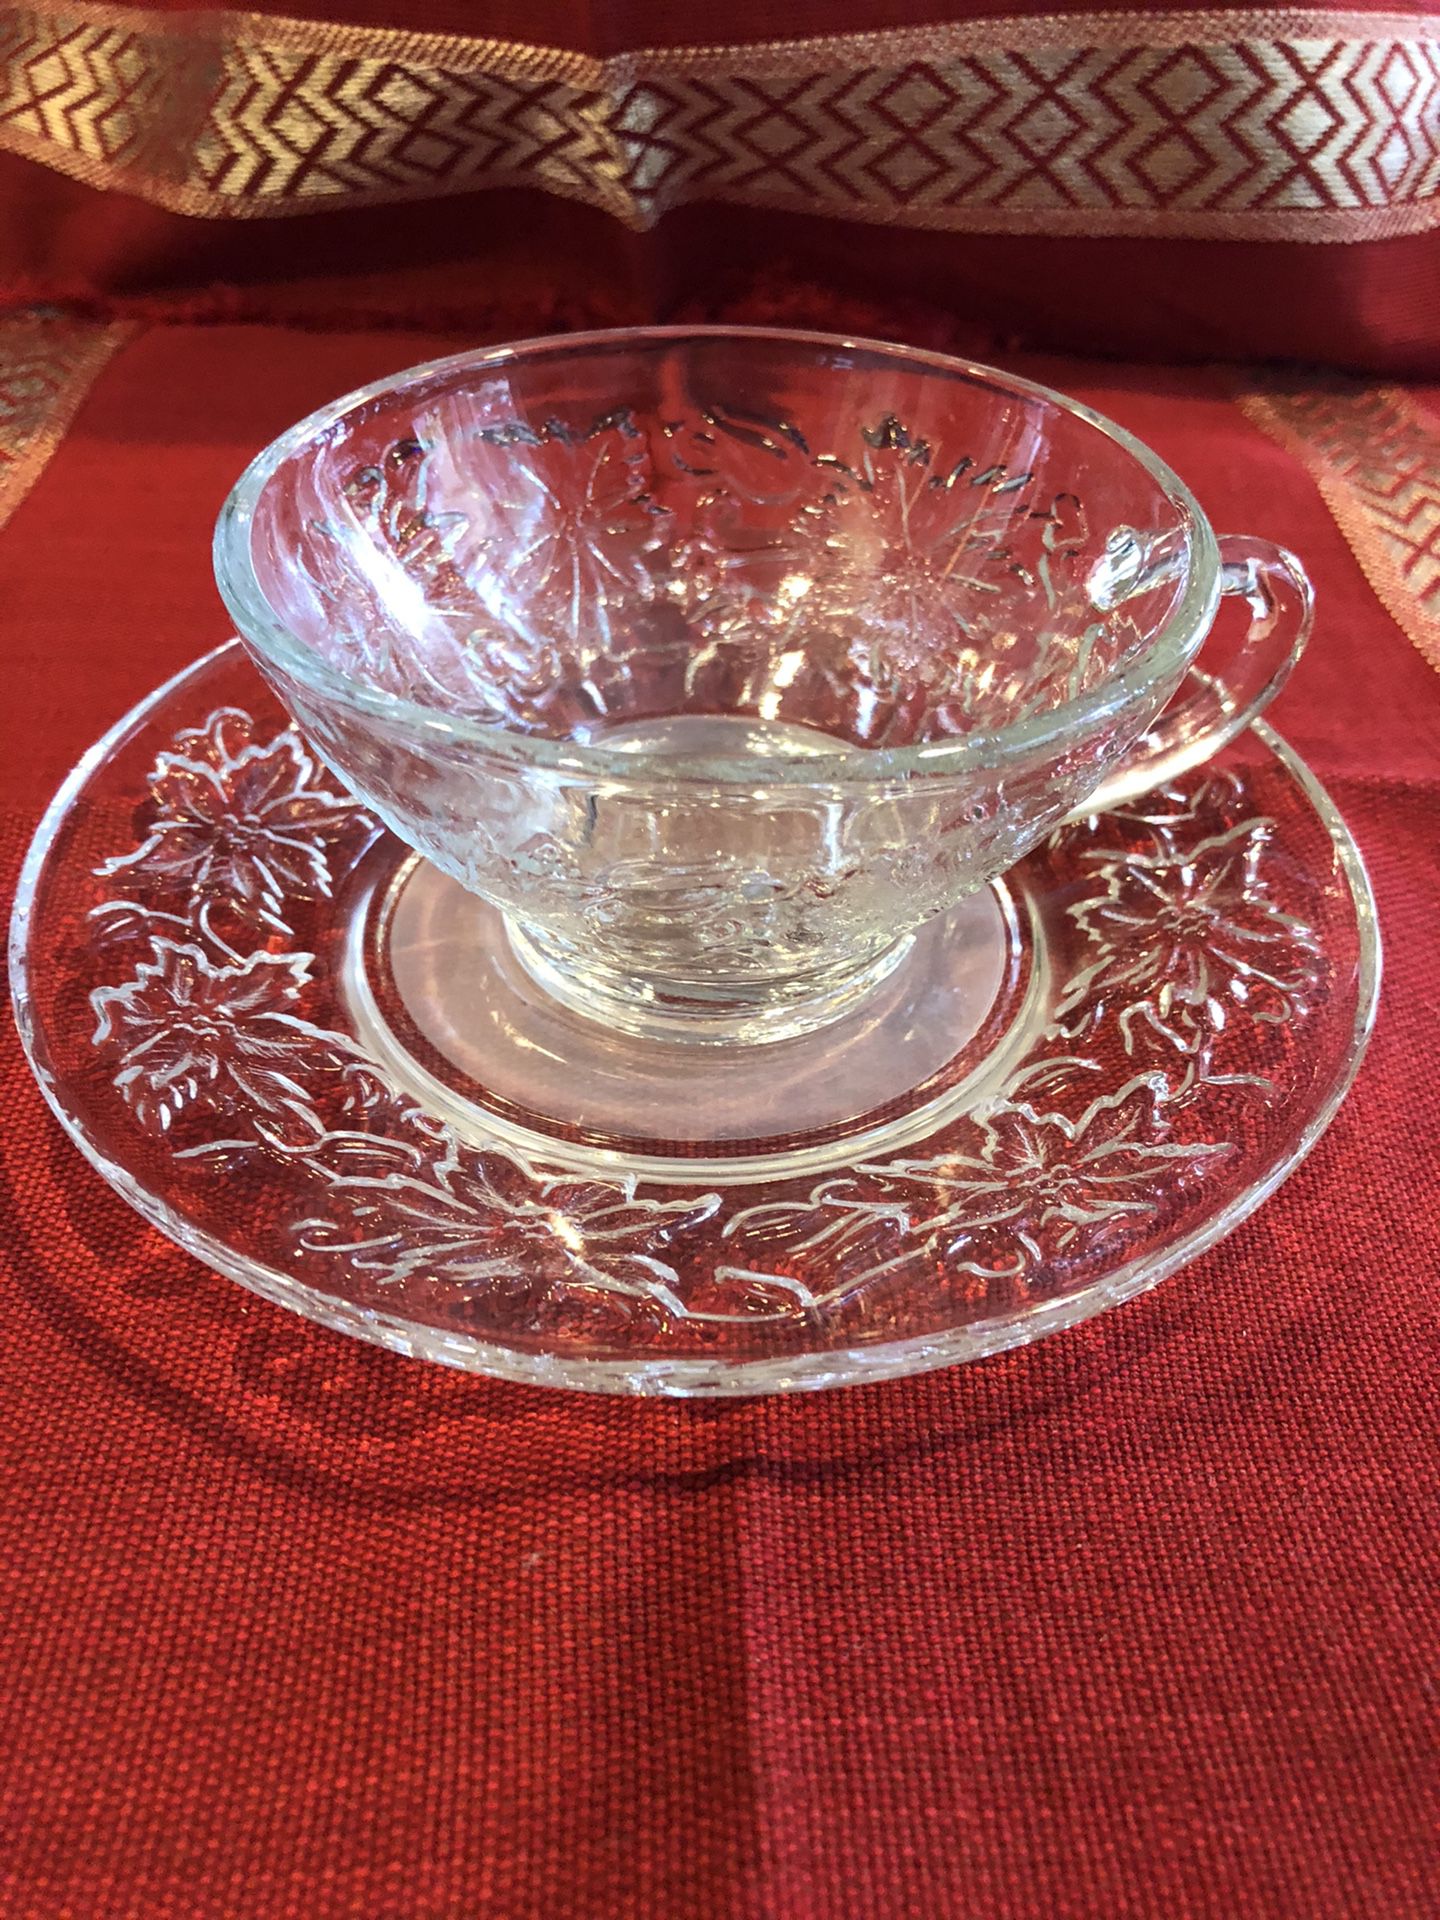 Princess House Poinsettia Teacups and Plate Set